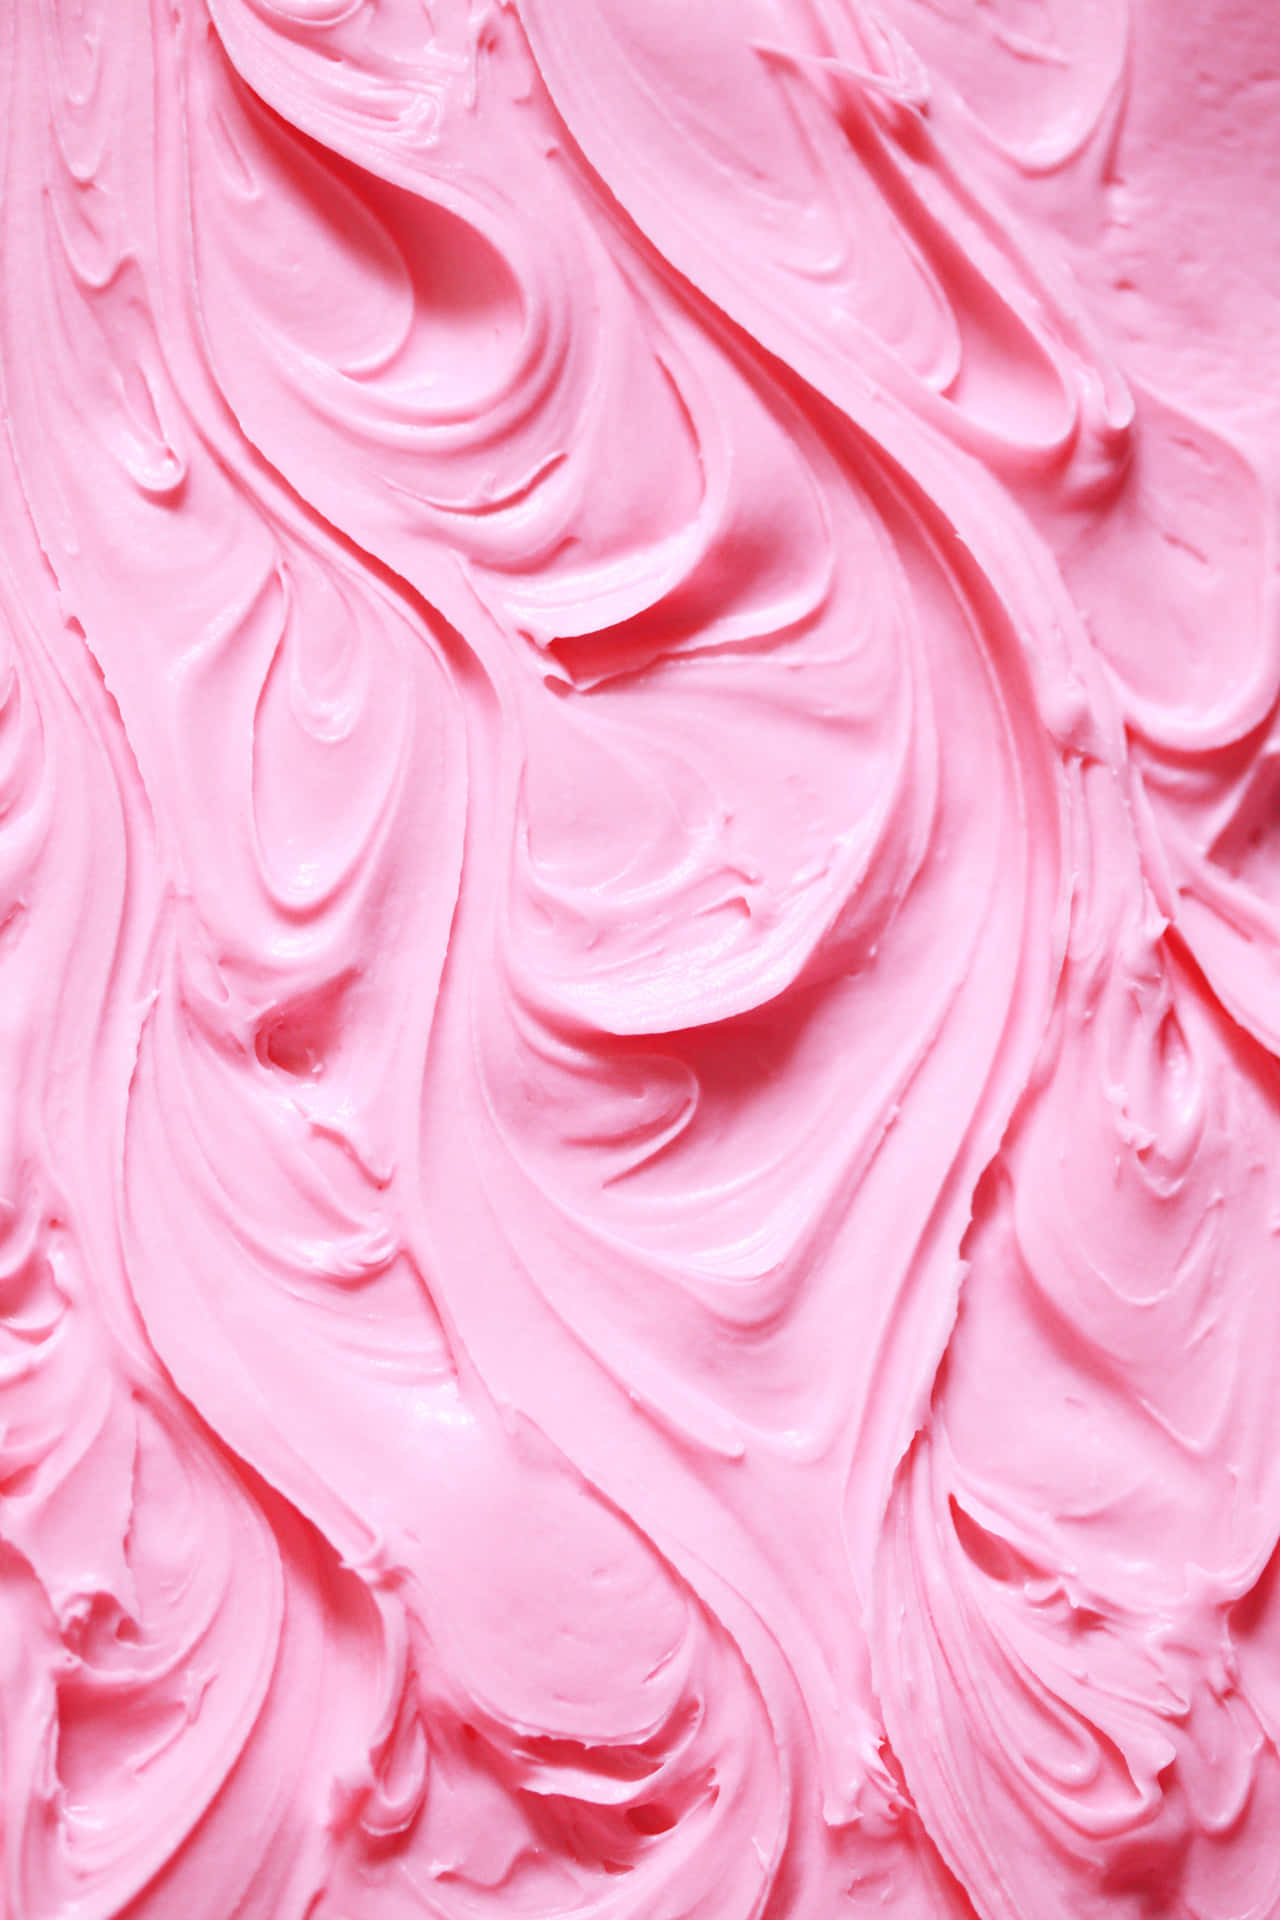 Blush Pink Creamy Texture